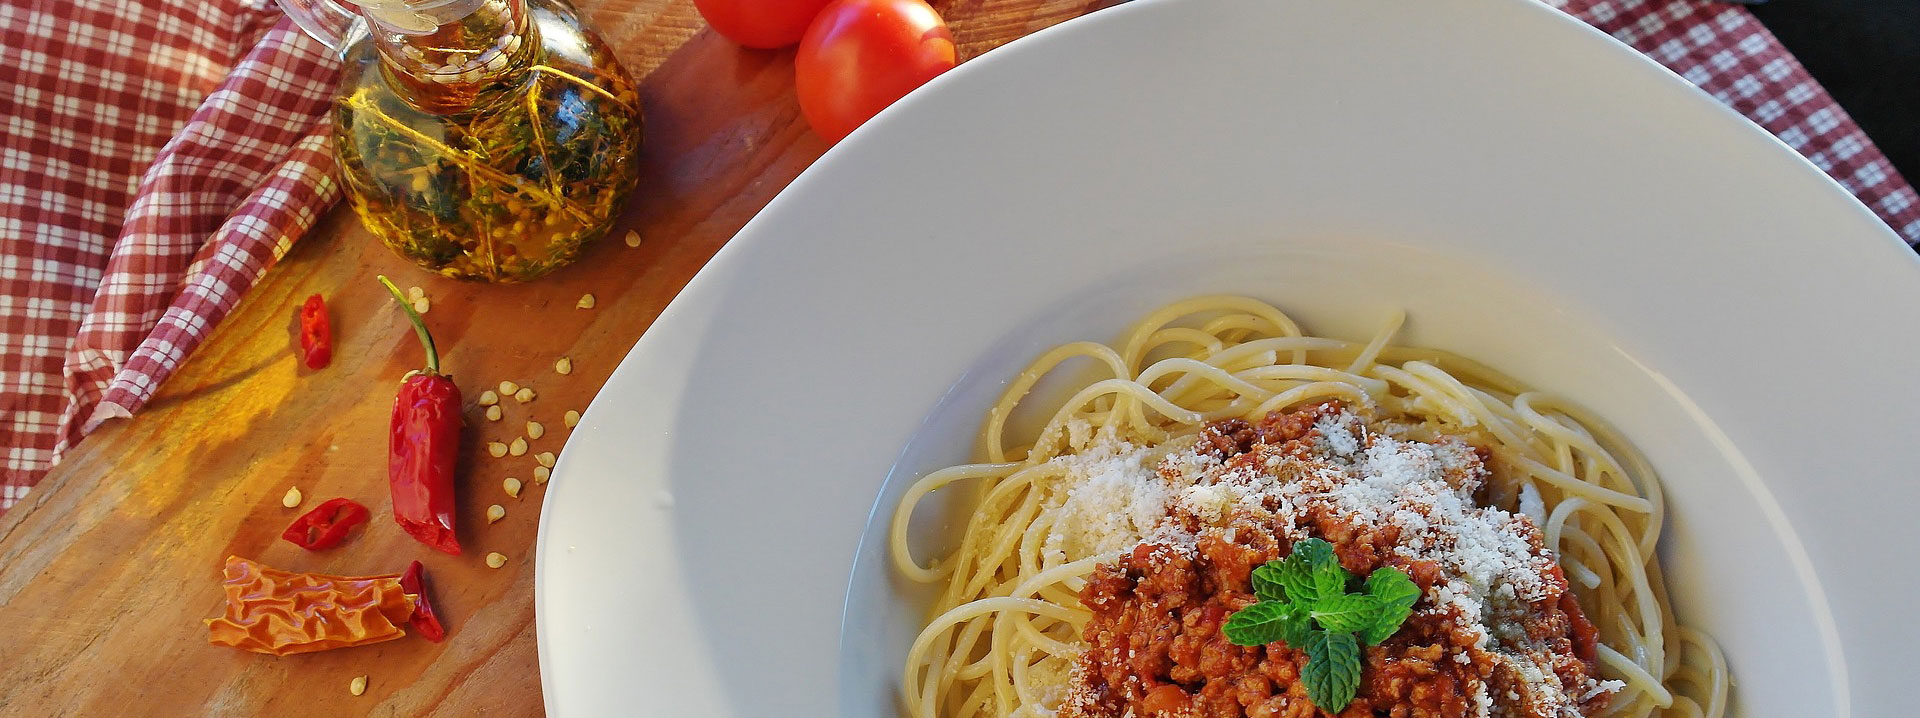 Spaghetti Italienische Meile